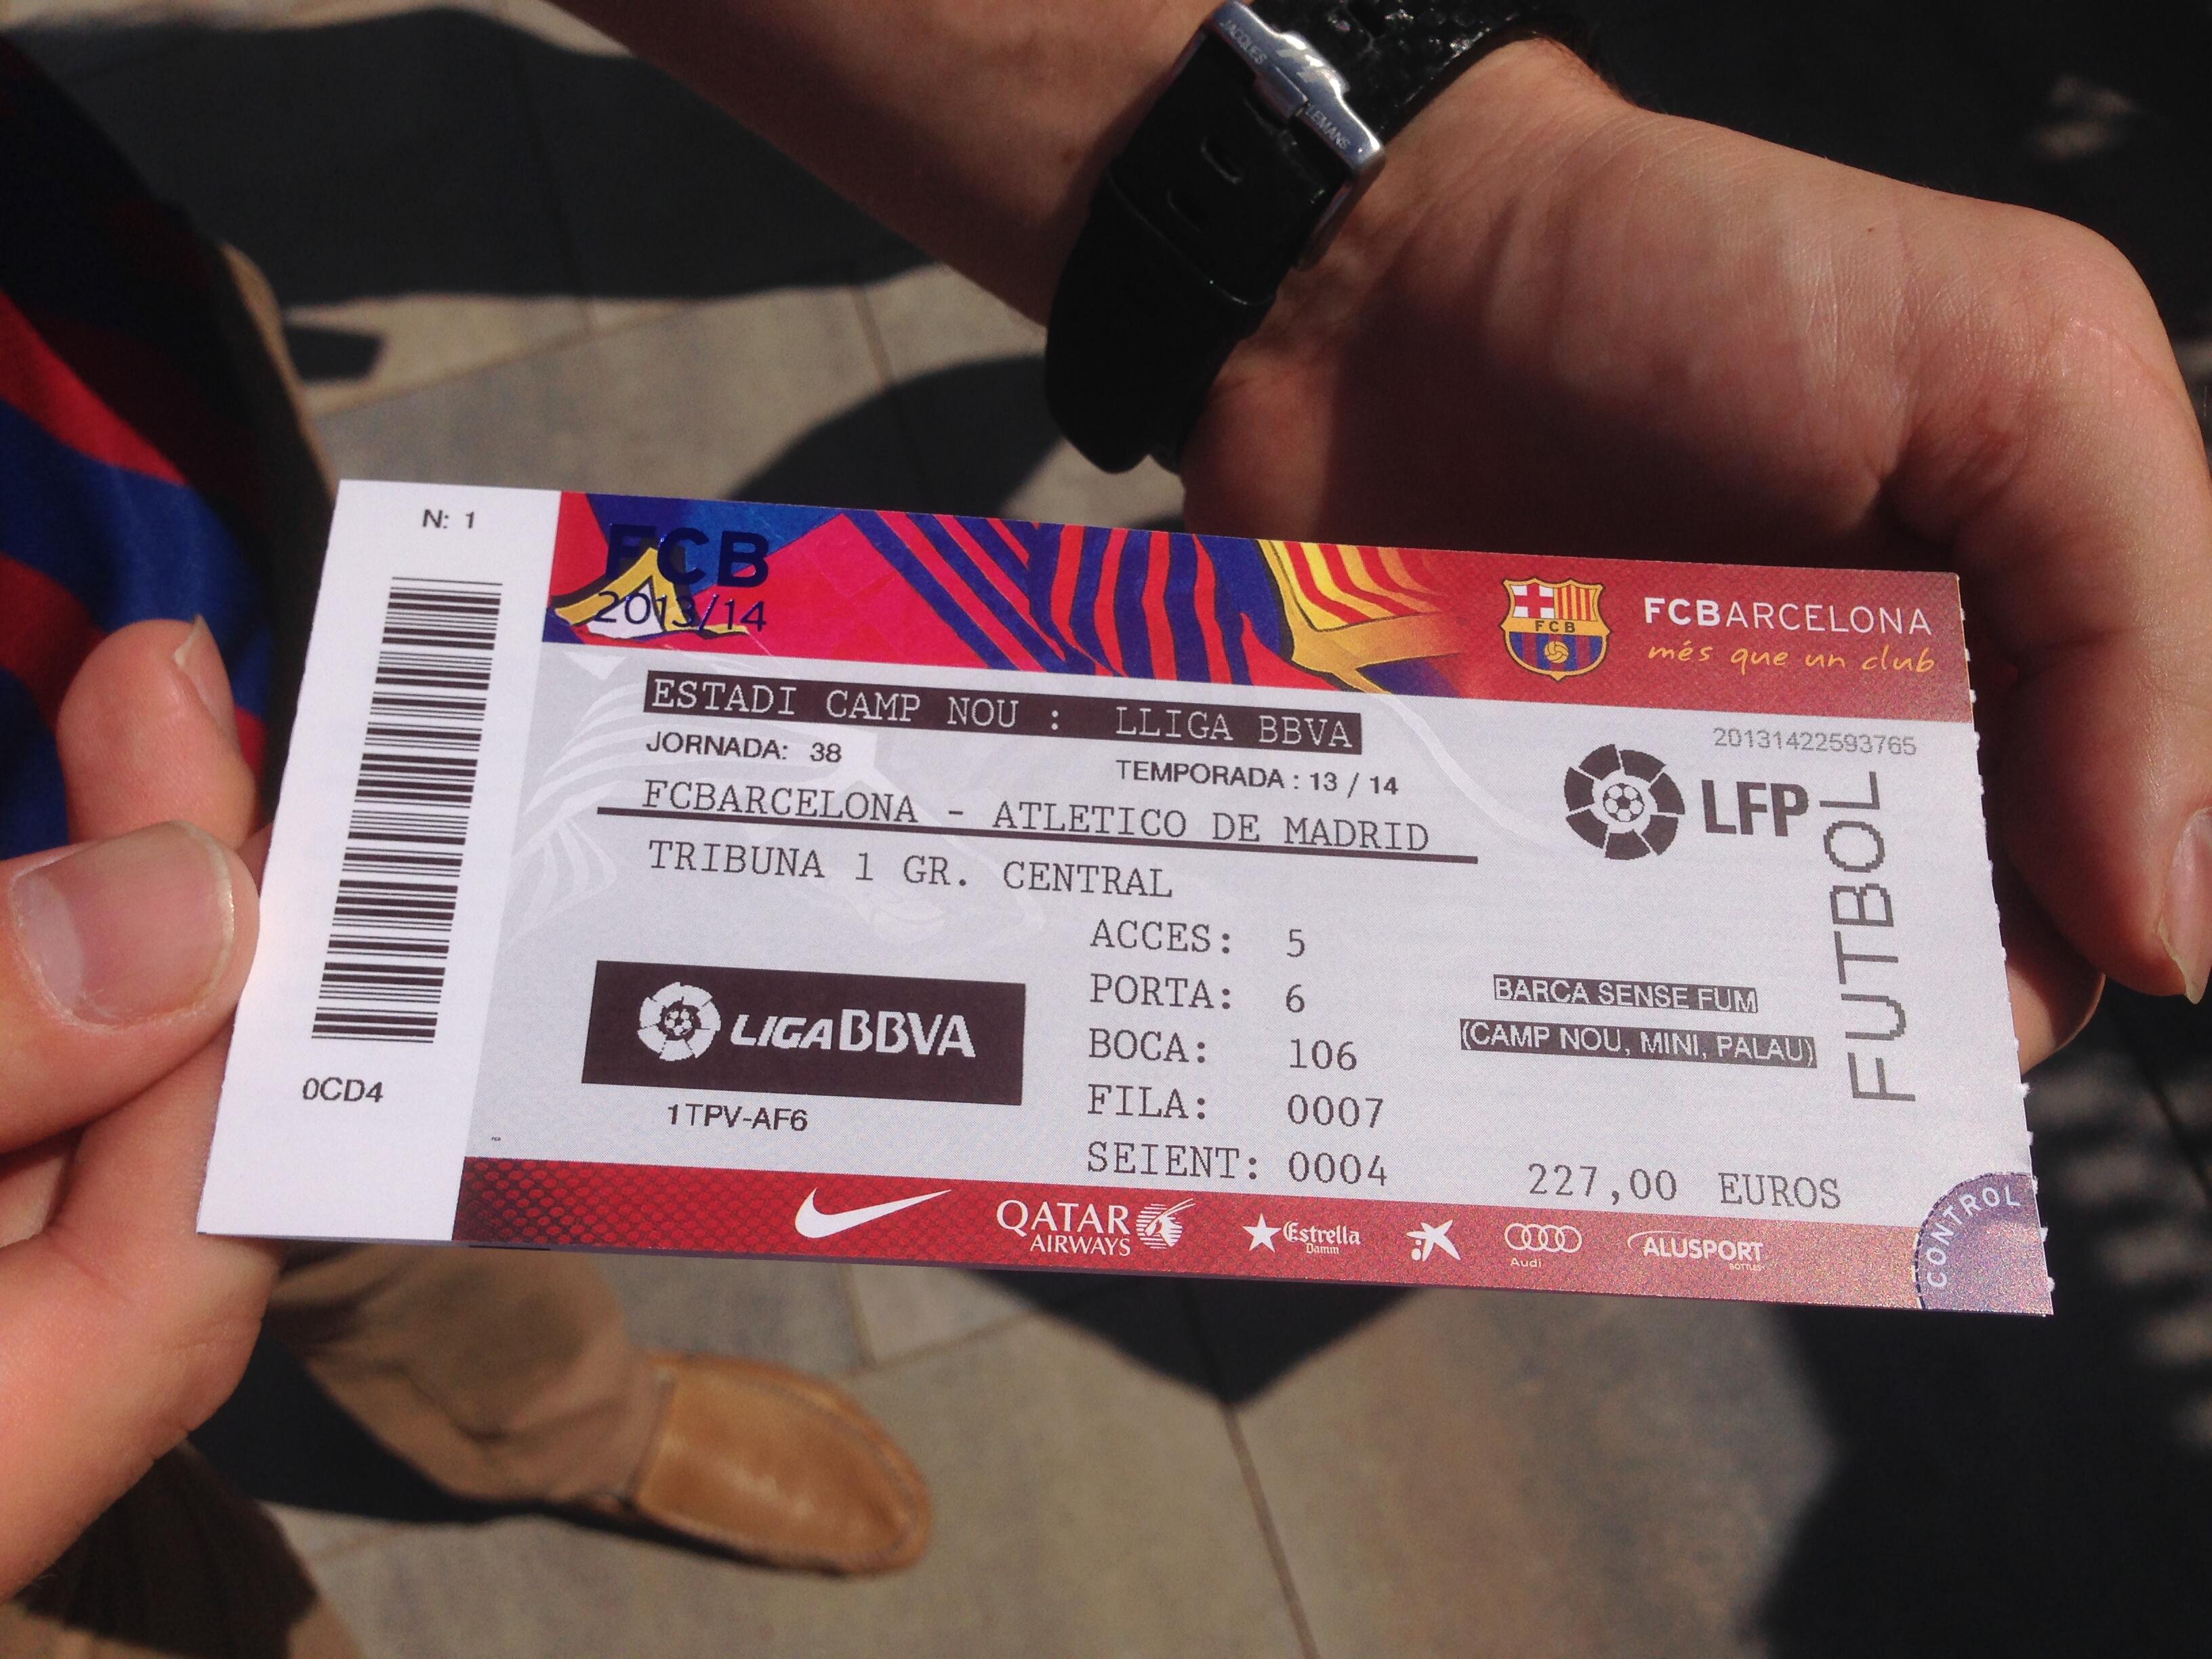 Universal tenis principio Twitter 上的BBC Sport："Just the ticket - follow the La Liga title decider,  Barcelona v Atletico Madrid http://t.co/B82bB3Tro4 #bbceurofooty  http://t.co/t0Pxw0Q6xl" / Twitter